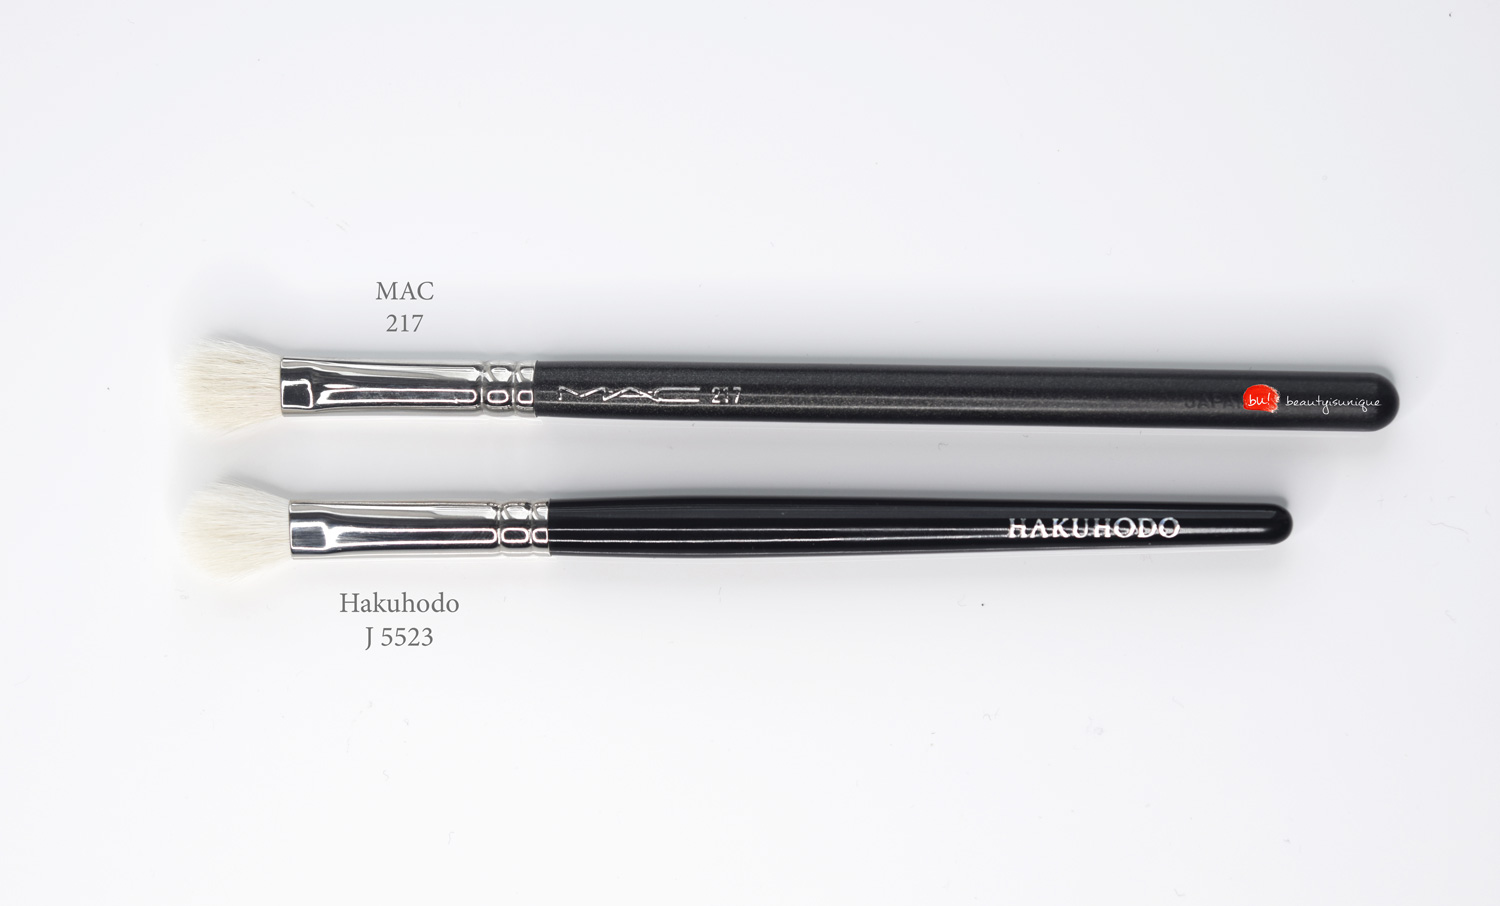  Hakuhodo-J5523-vs-mac-219